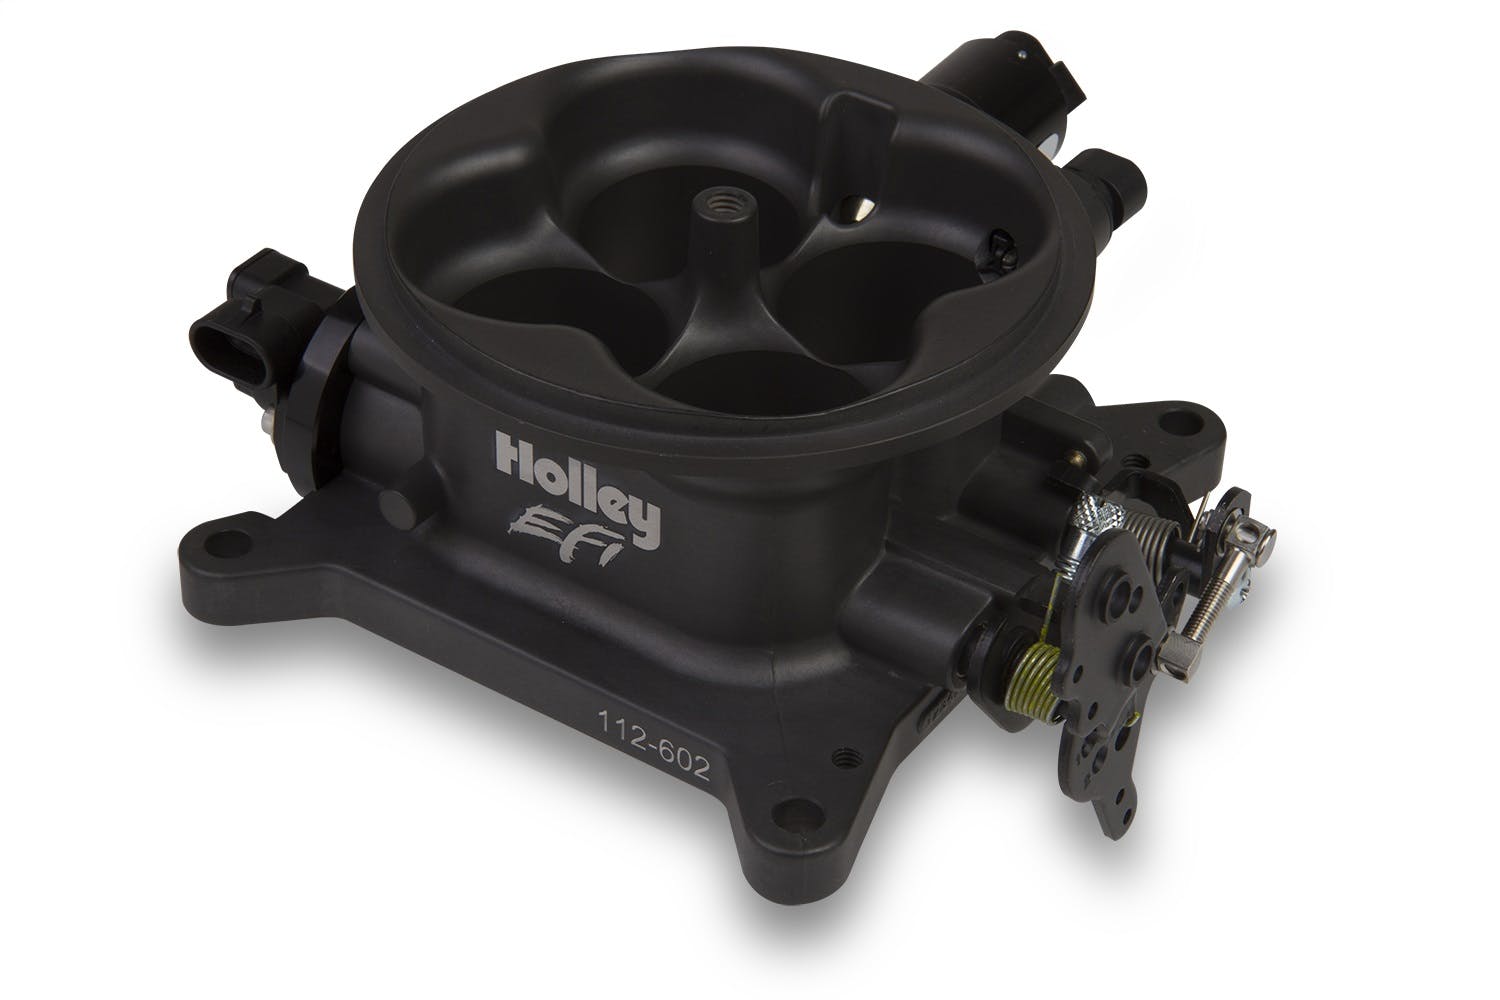 Holley EFI 112-602 MPFI RACE THROTTLE BODY -  HARD CORE GRA